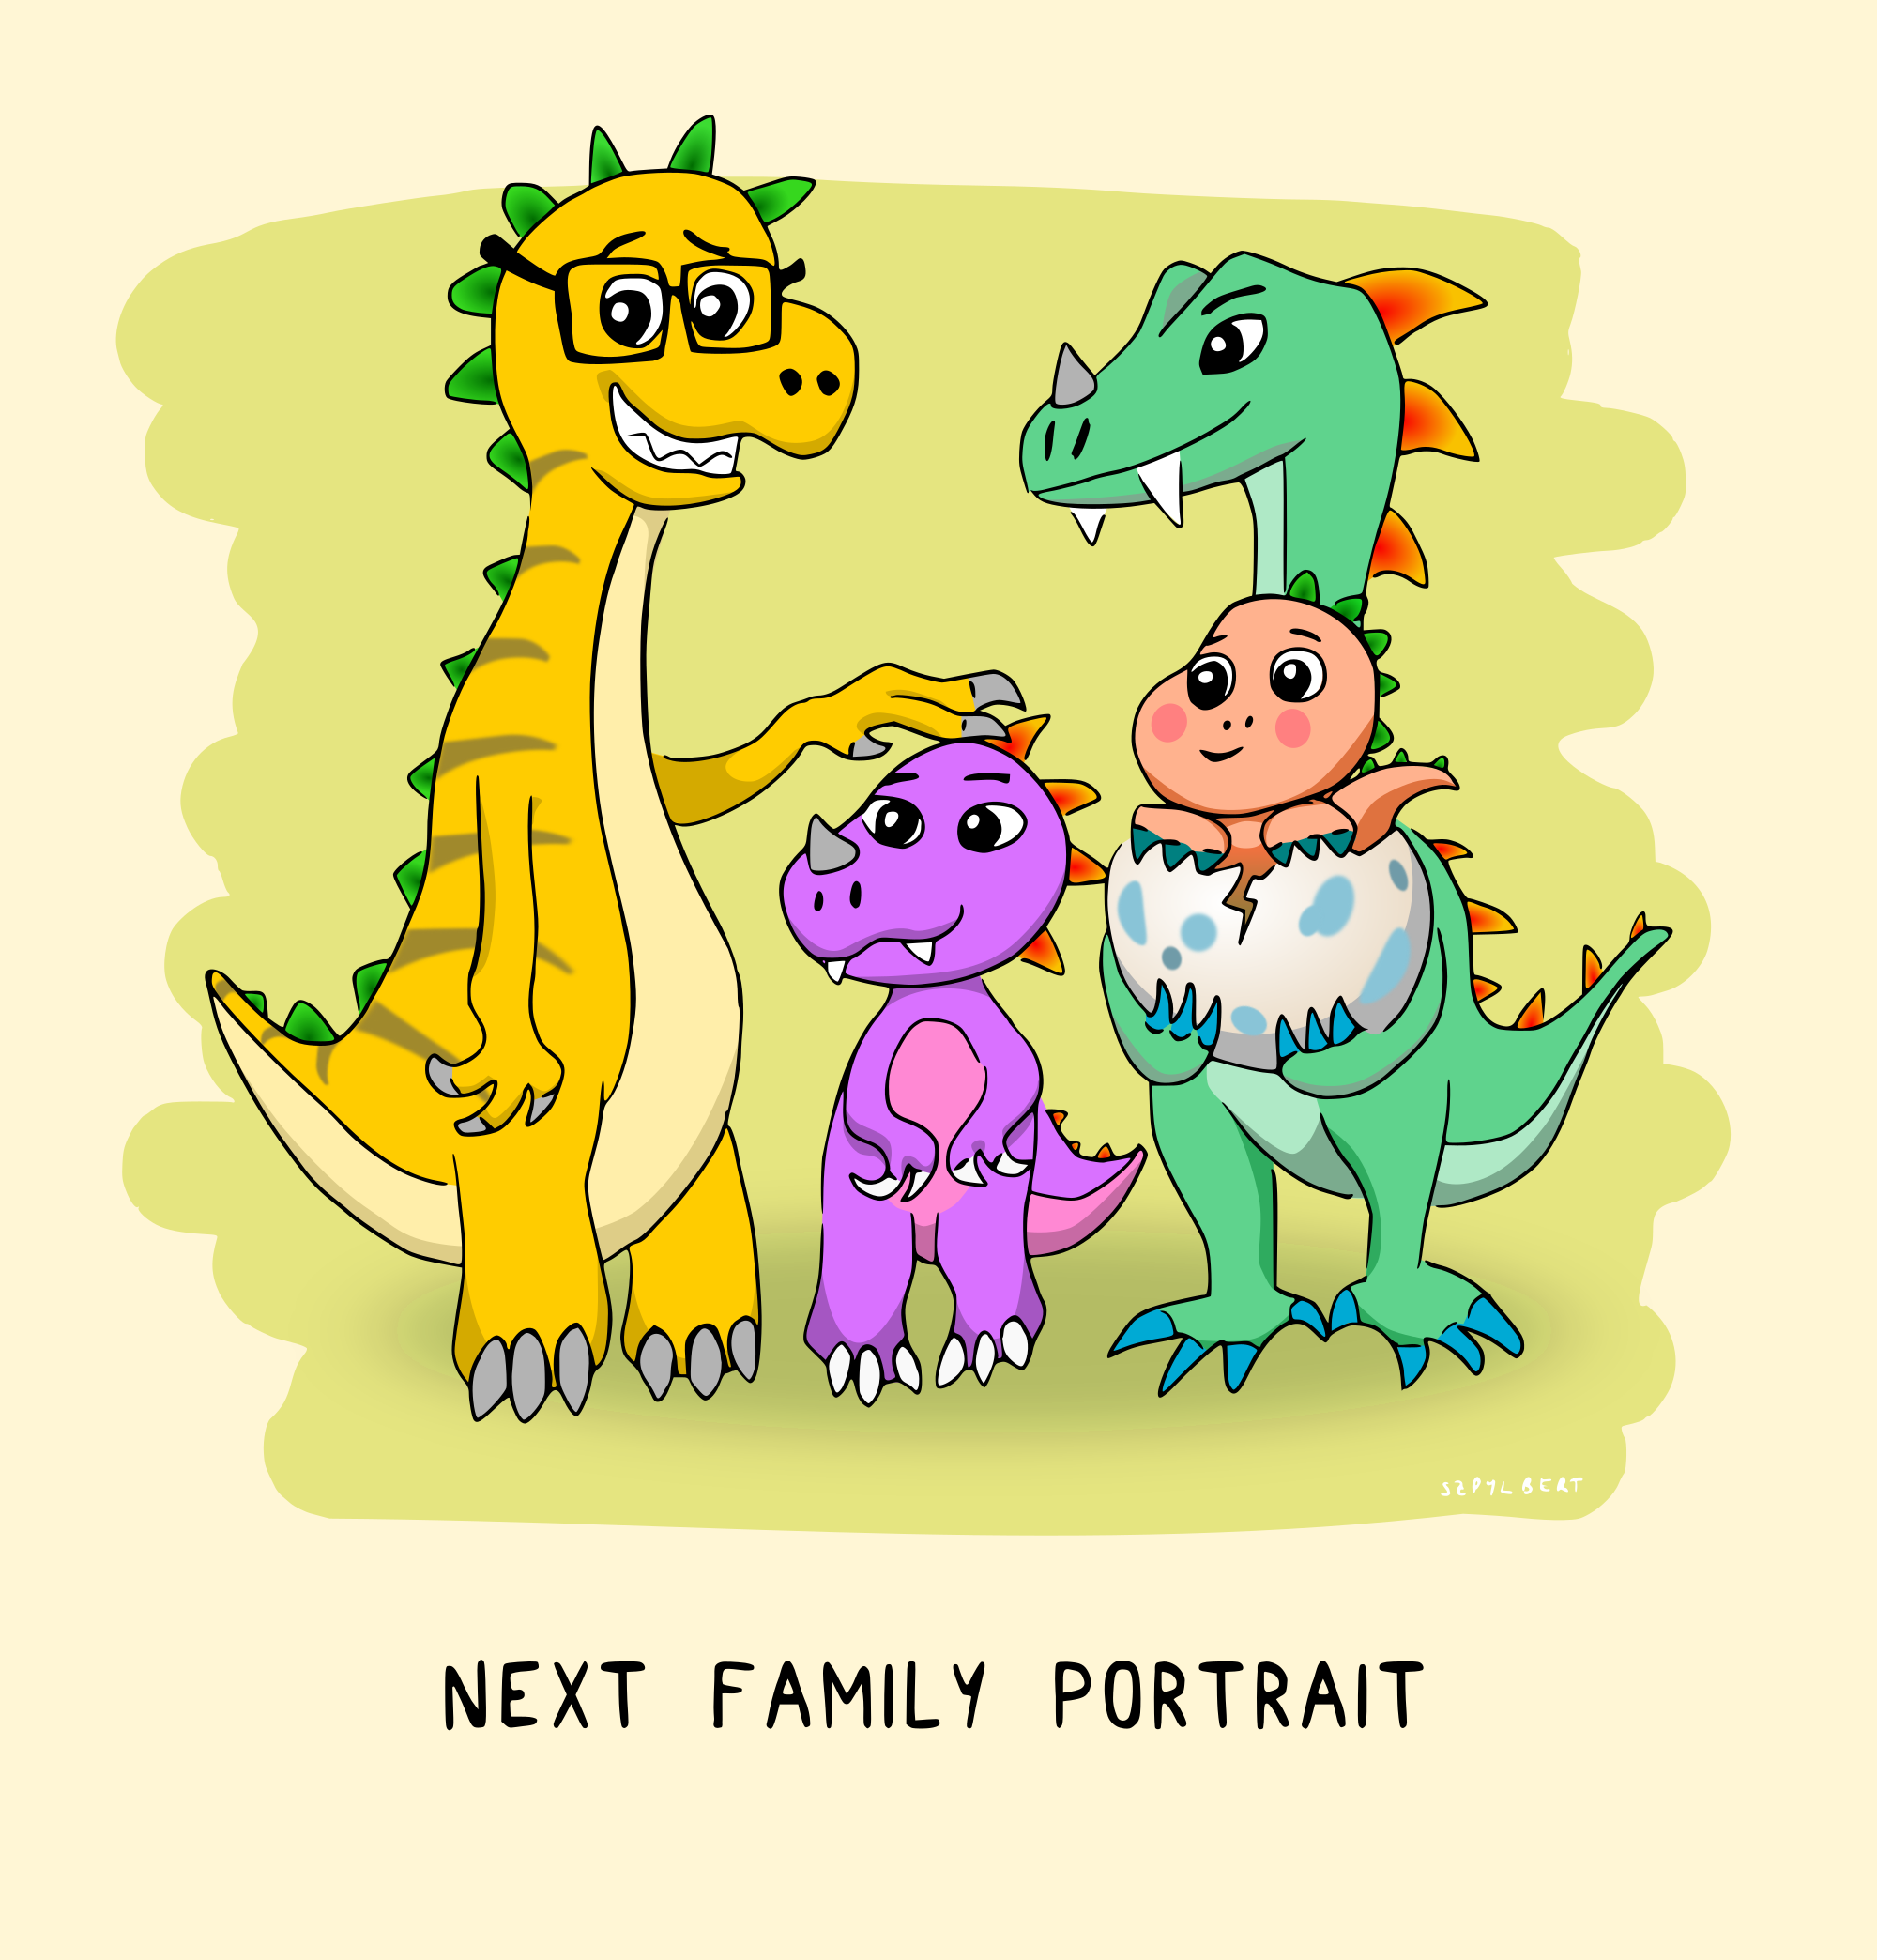 Szpylbert's Family Portrait 2020